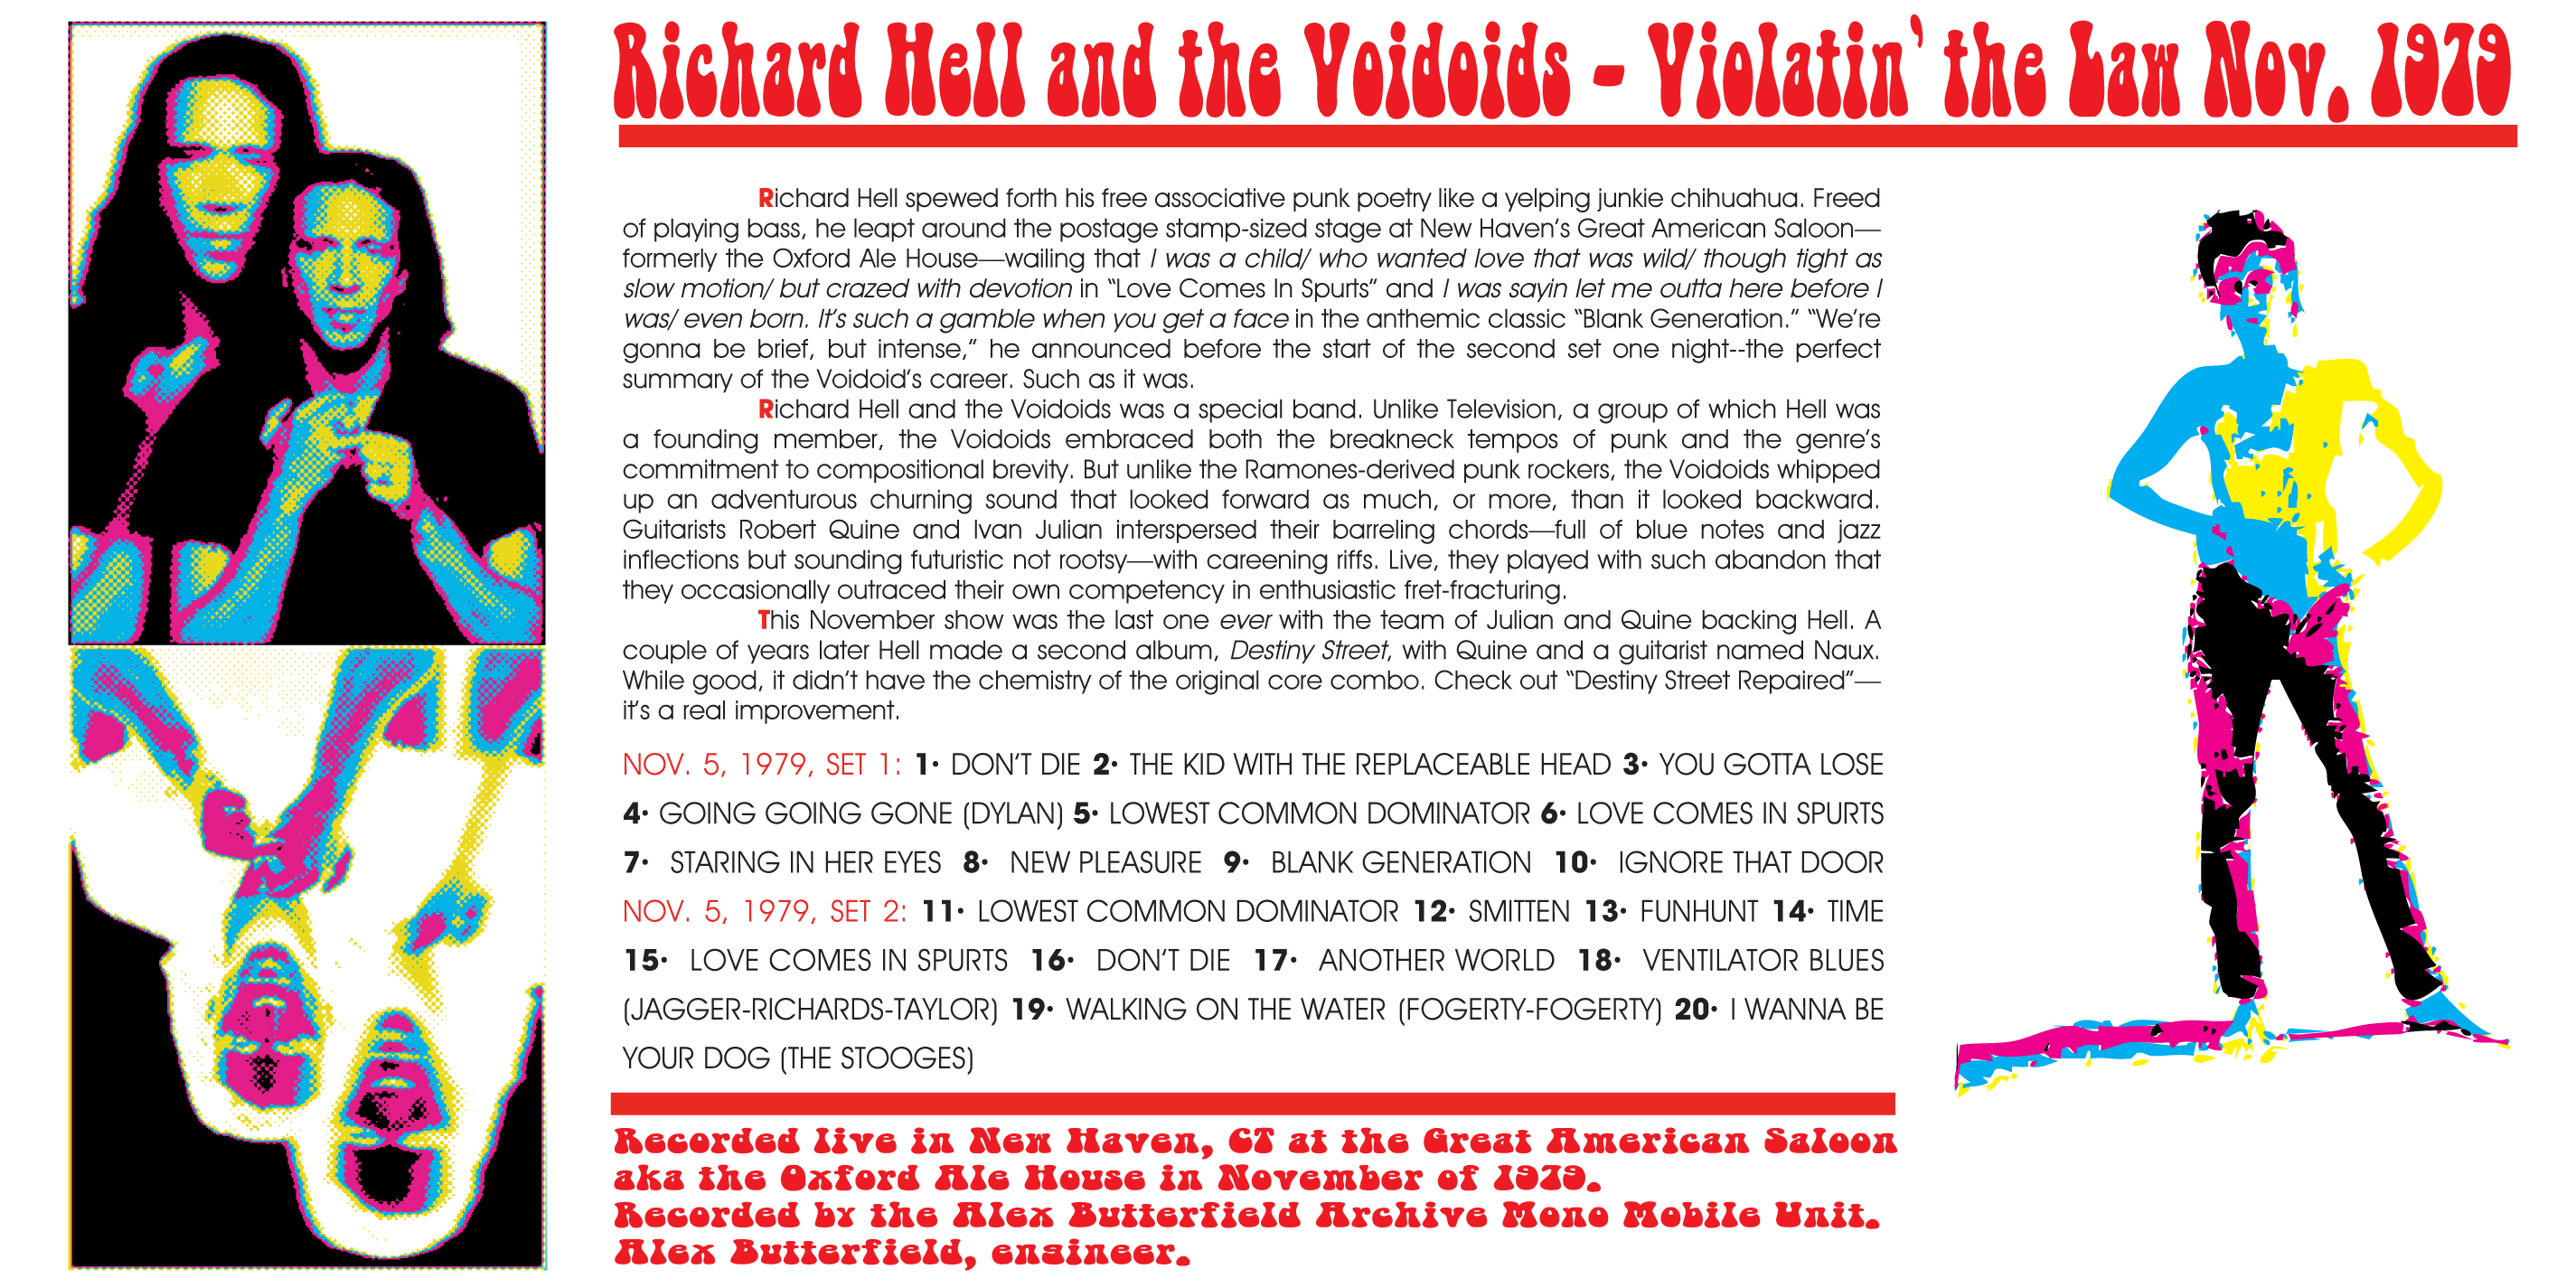 RichardHellAndTheVoidoids1979-11-05OxfordAleHouseNewHavenCT (2).jpg